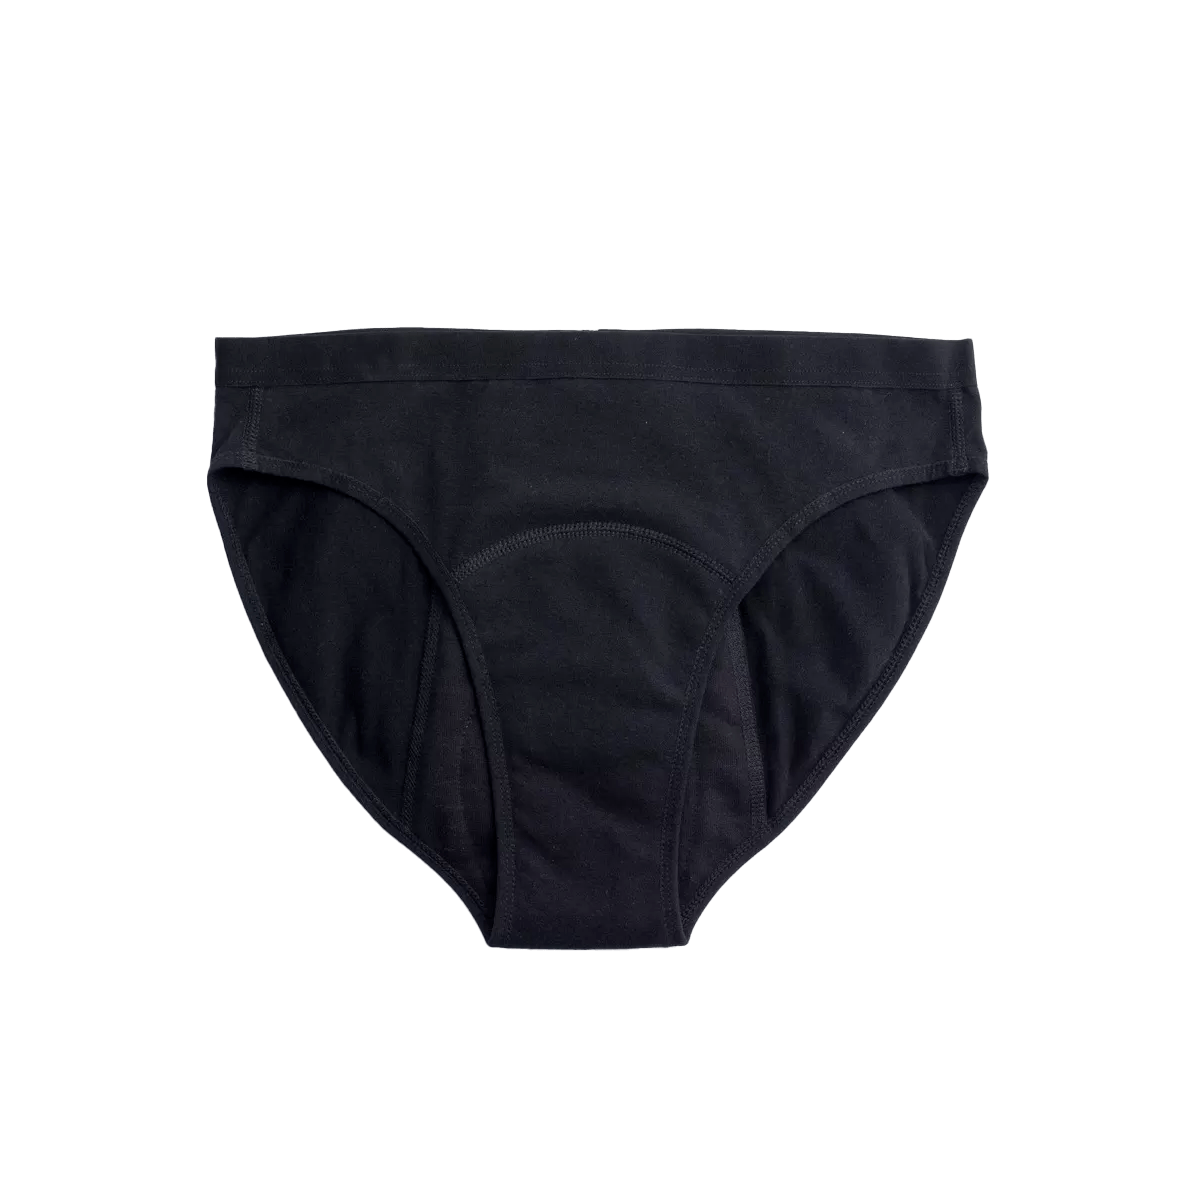 Angreb Periodisk Identificere Imse Period Underwear Bikini Heavy Flow, Black - Flere størrelser